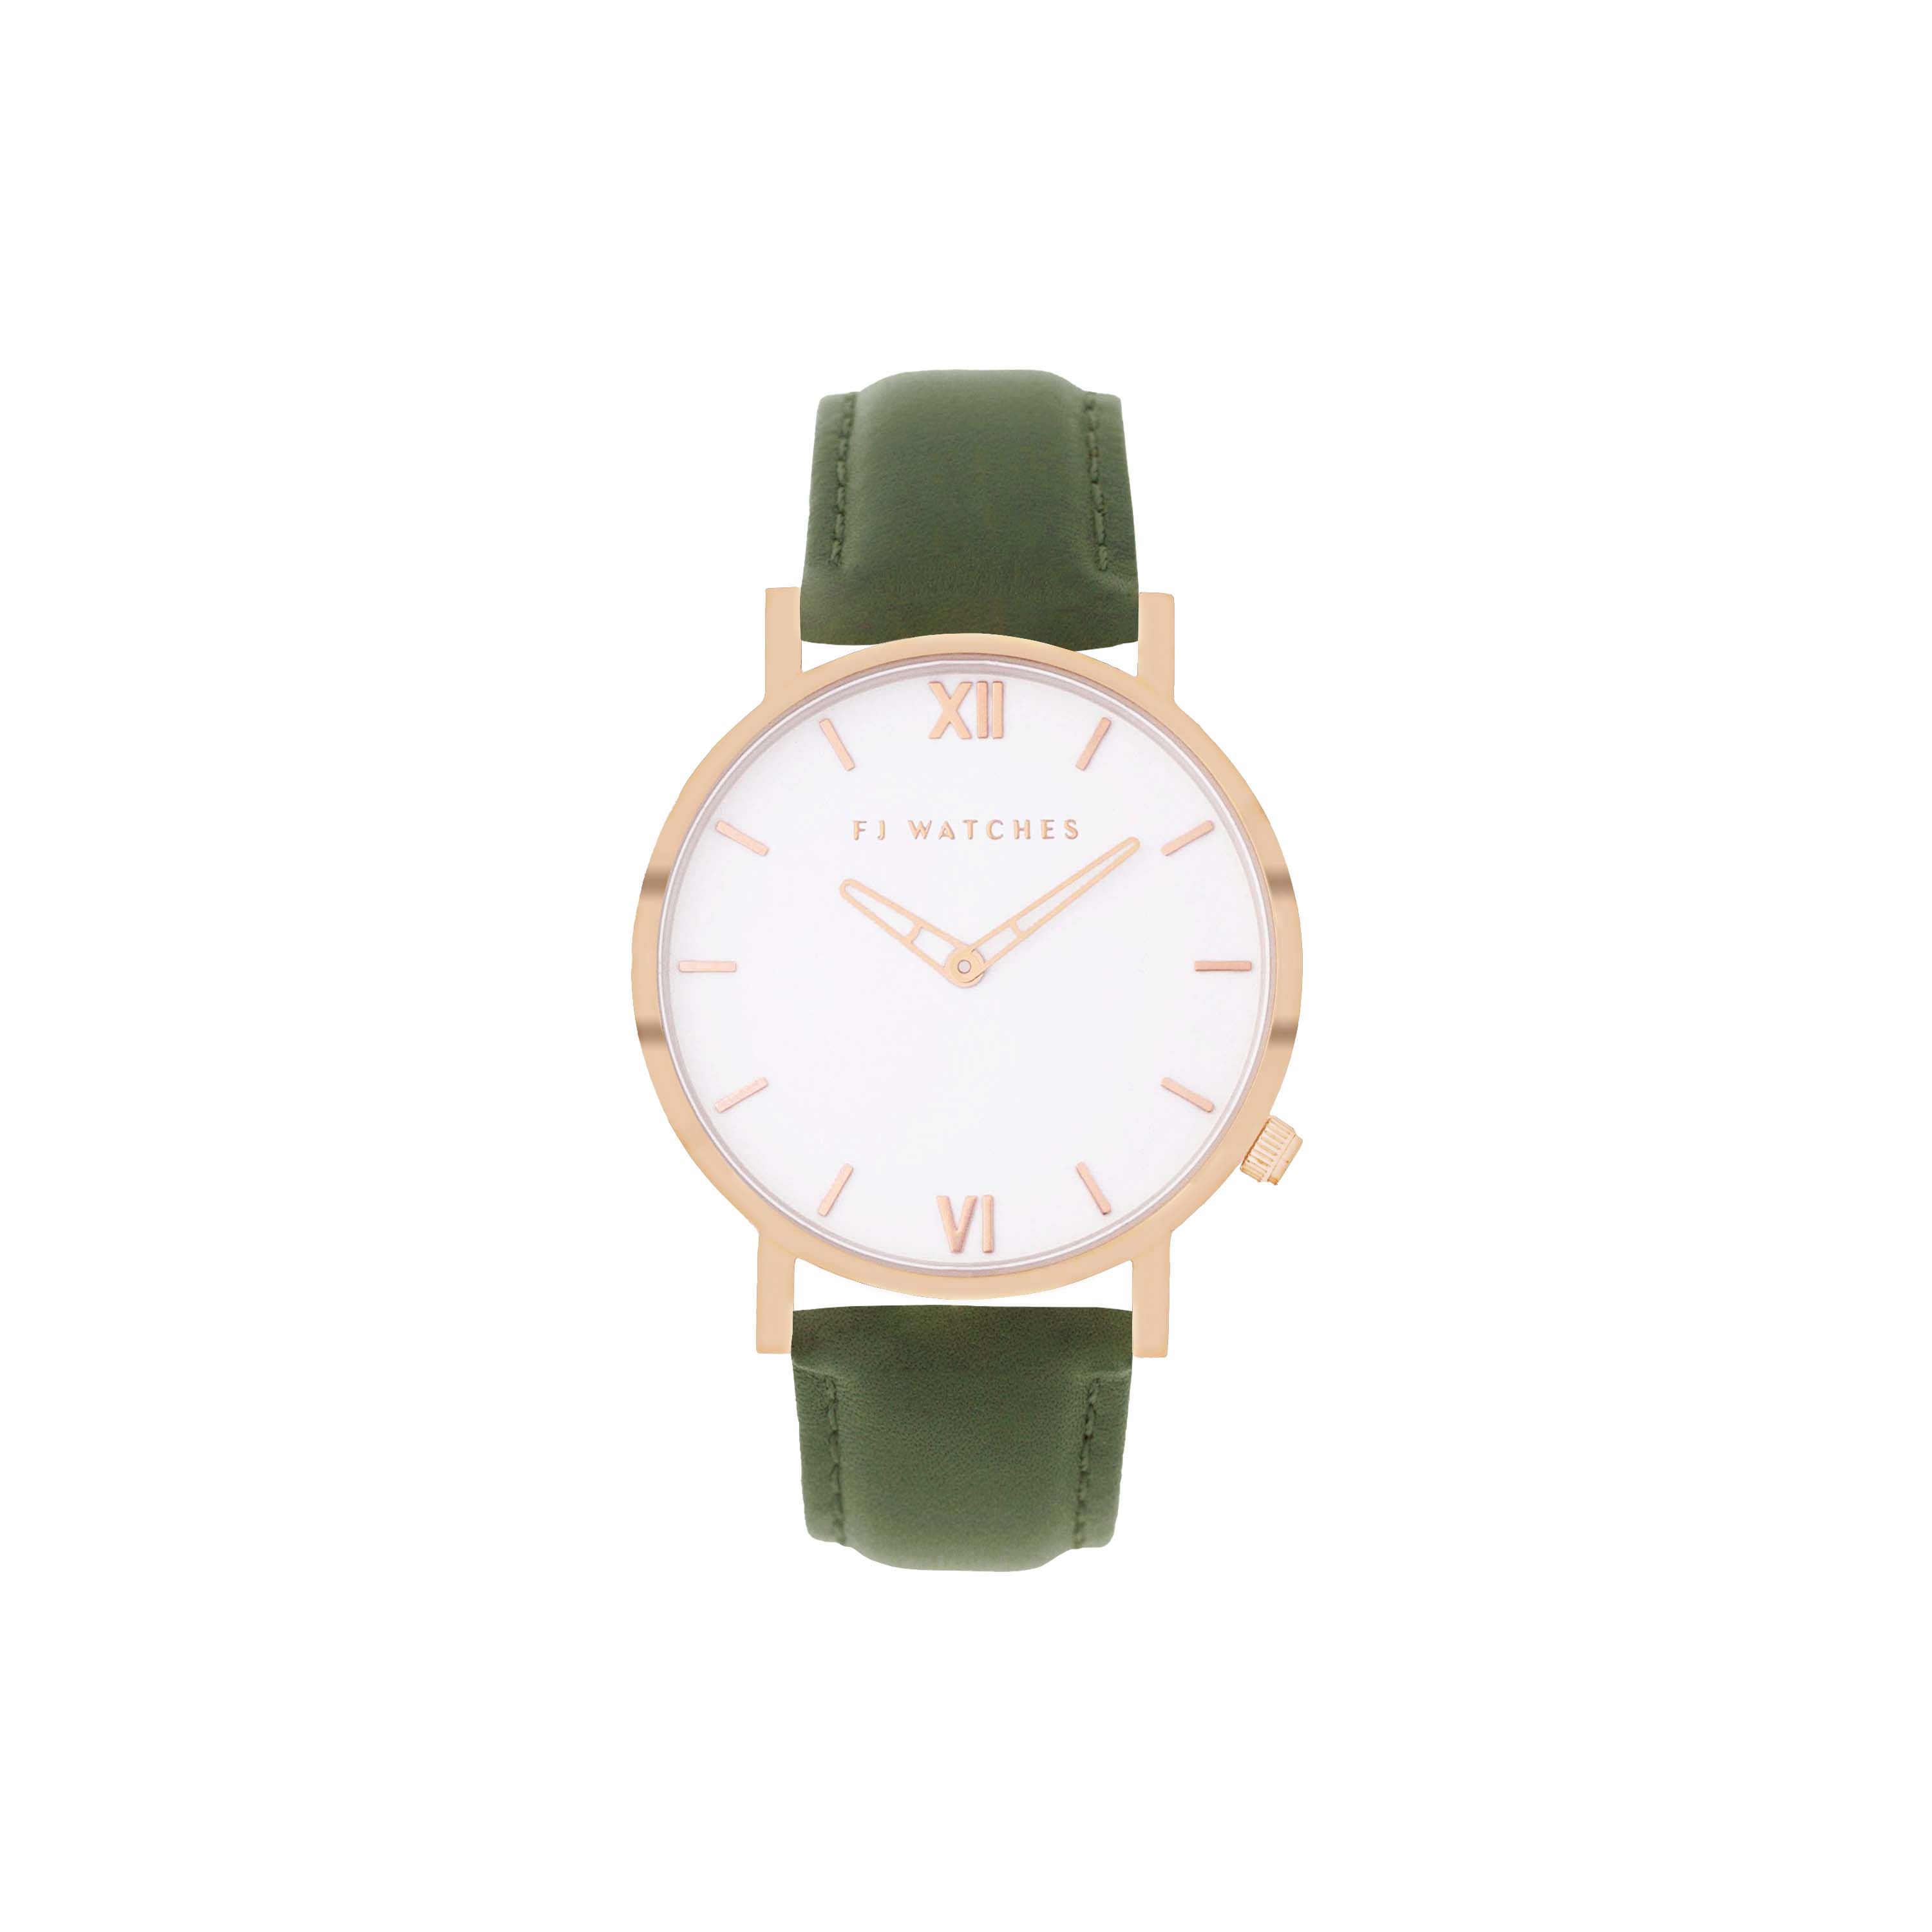 FJ Watches Golden sun white rose gold watch men 42mm olive green leather strap minimalist